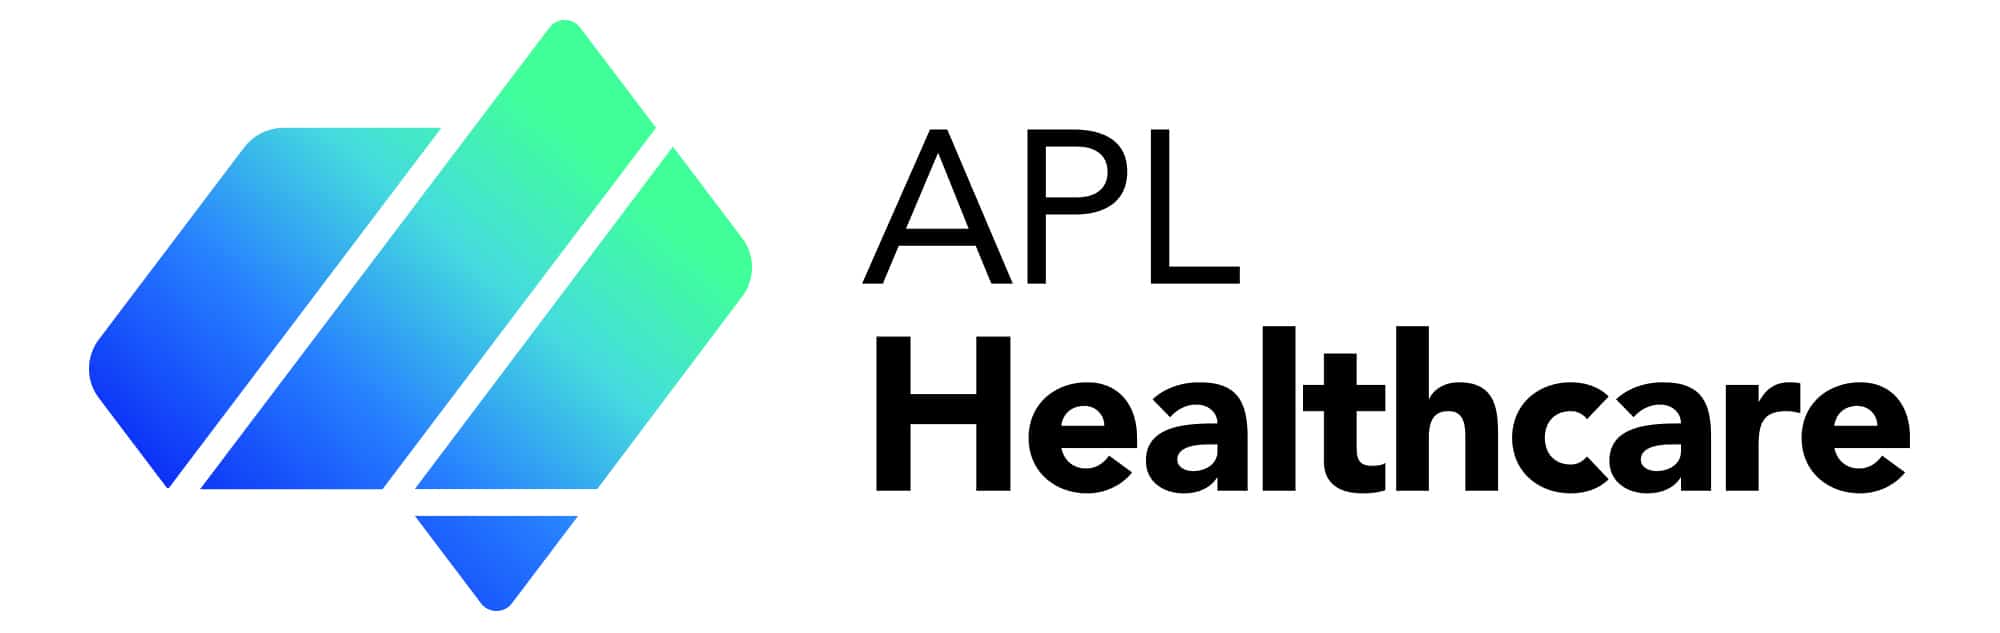 APL_apl healthcare logo_col-300dpi